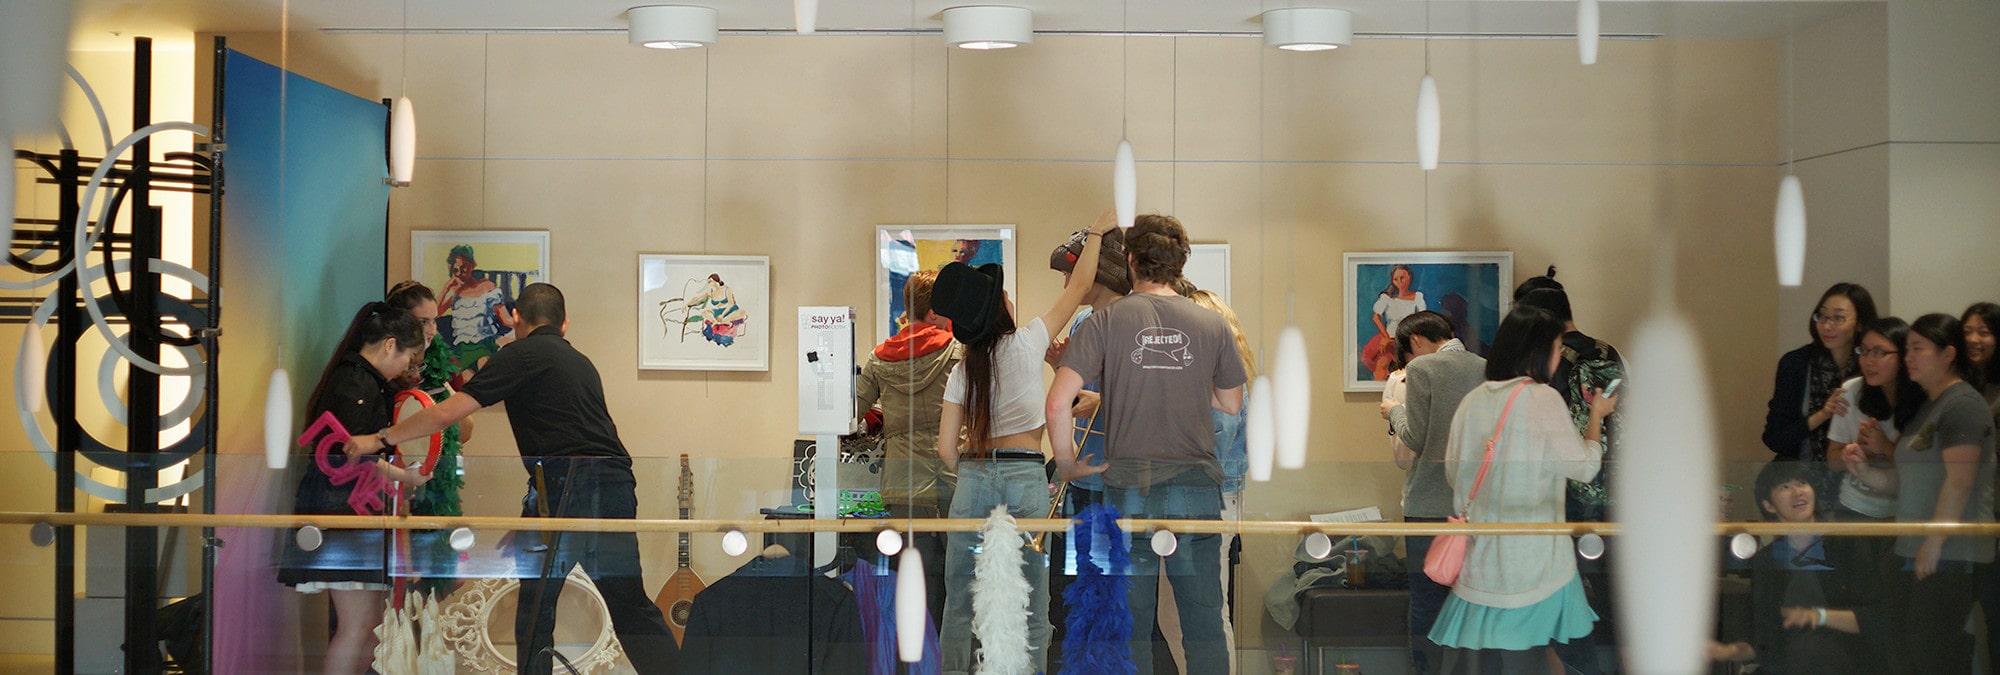 Students admire artwork at SFCM 50 Oak St. campus in Deleage second floor